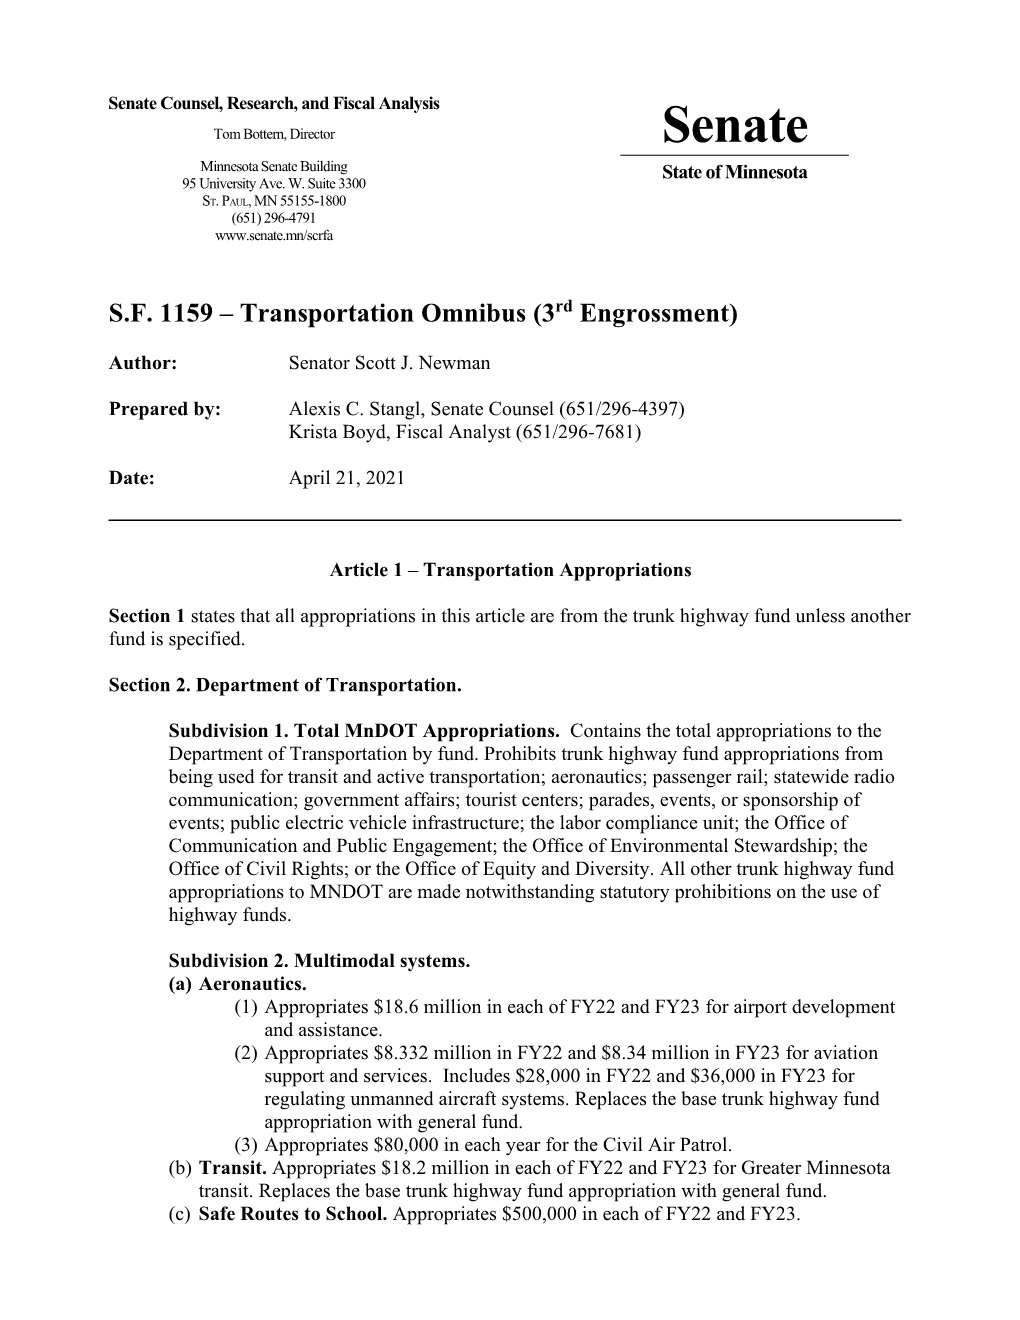 S.F. 1159 – Transportation Omnibus (3Rd Engrossment)